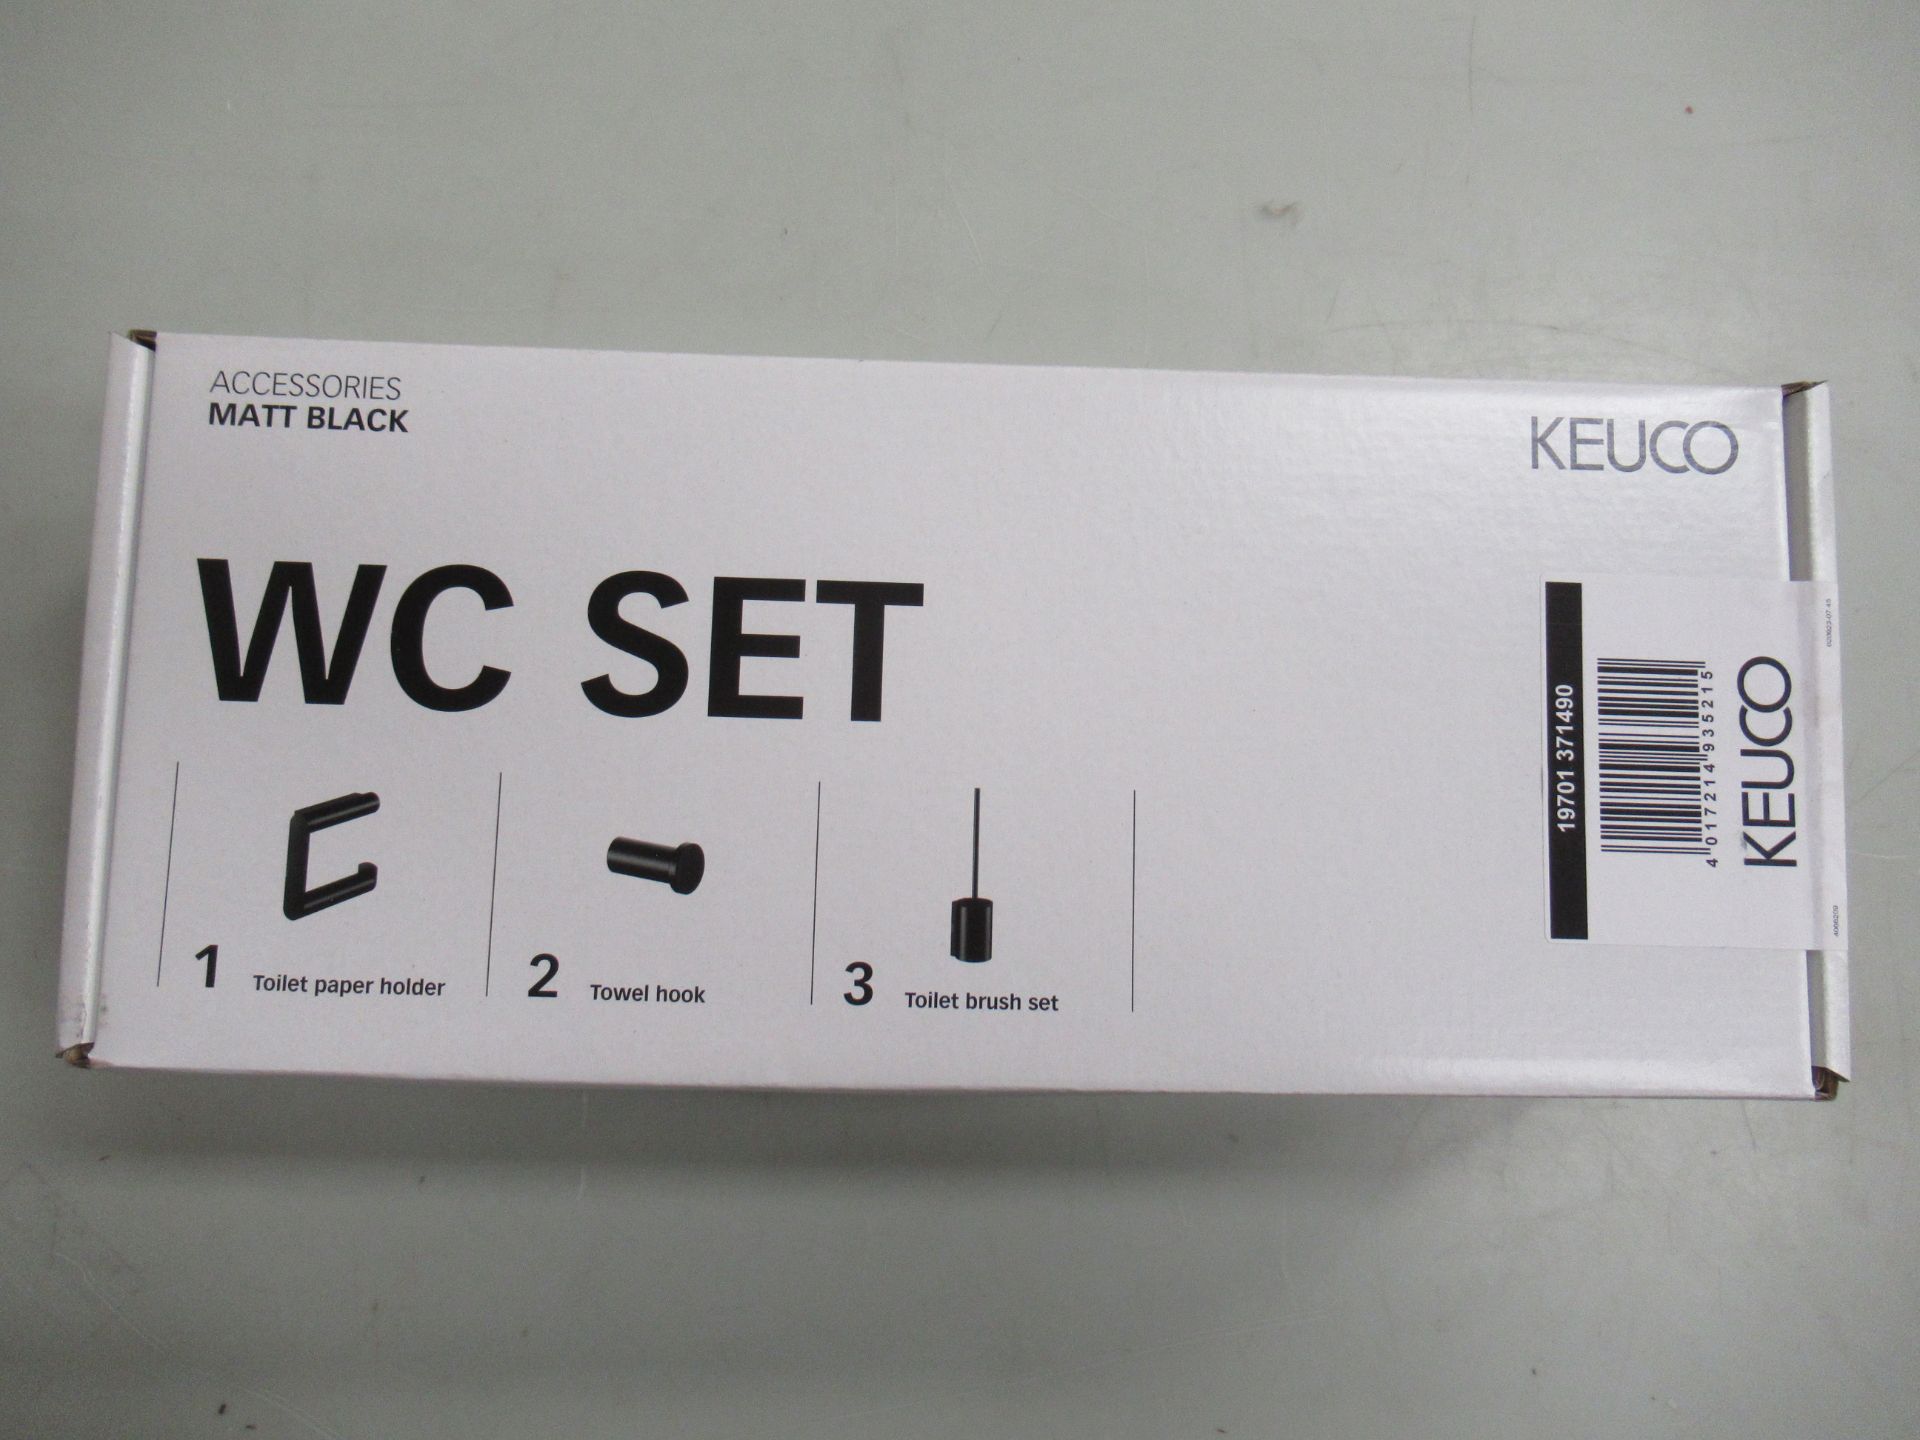 3 x Keuco W.C Set Black Matt, P/N 19701-371490